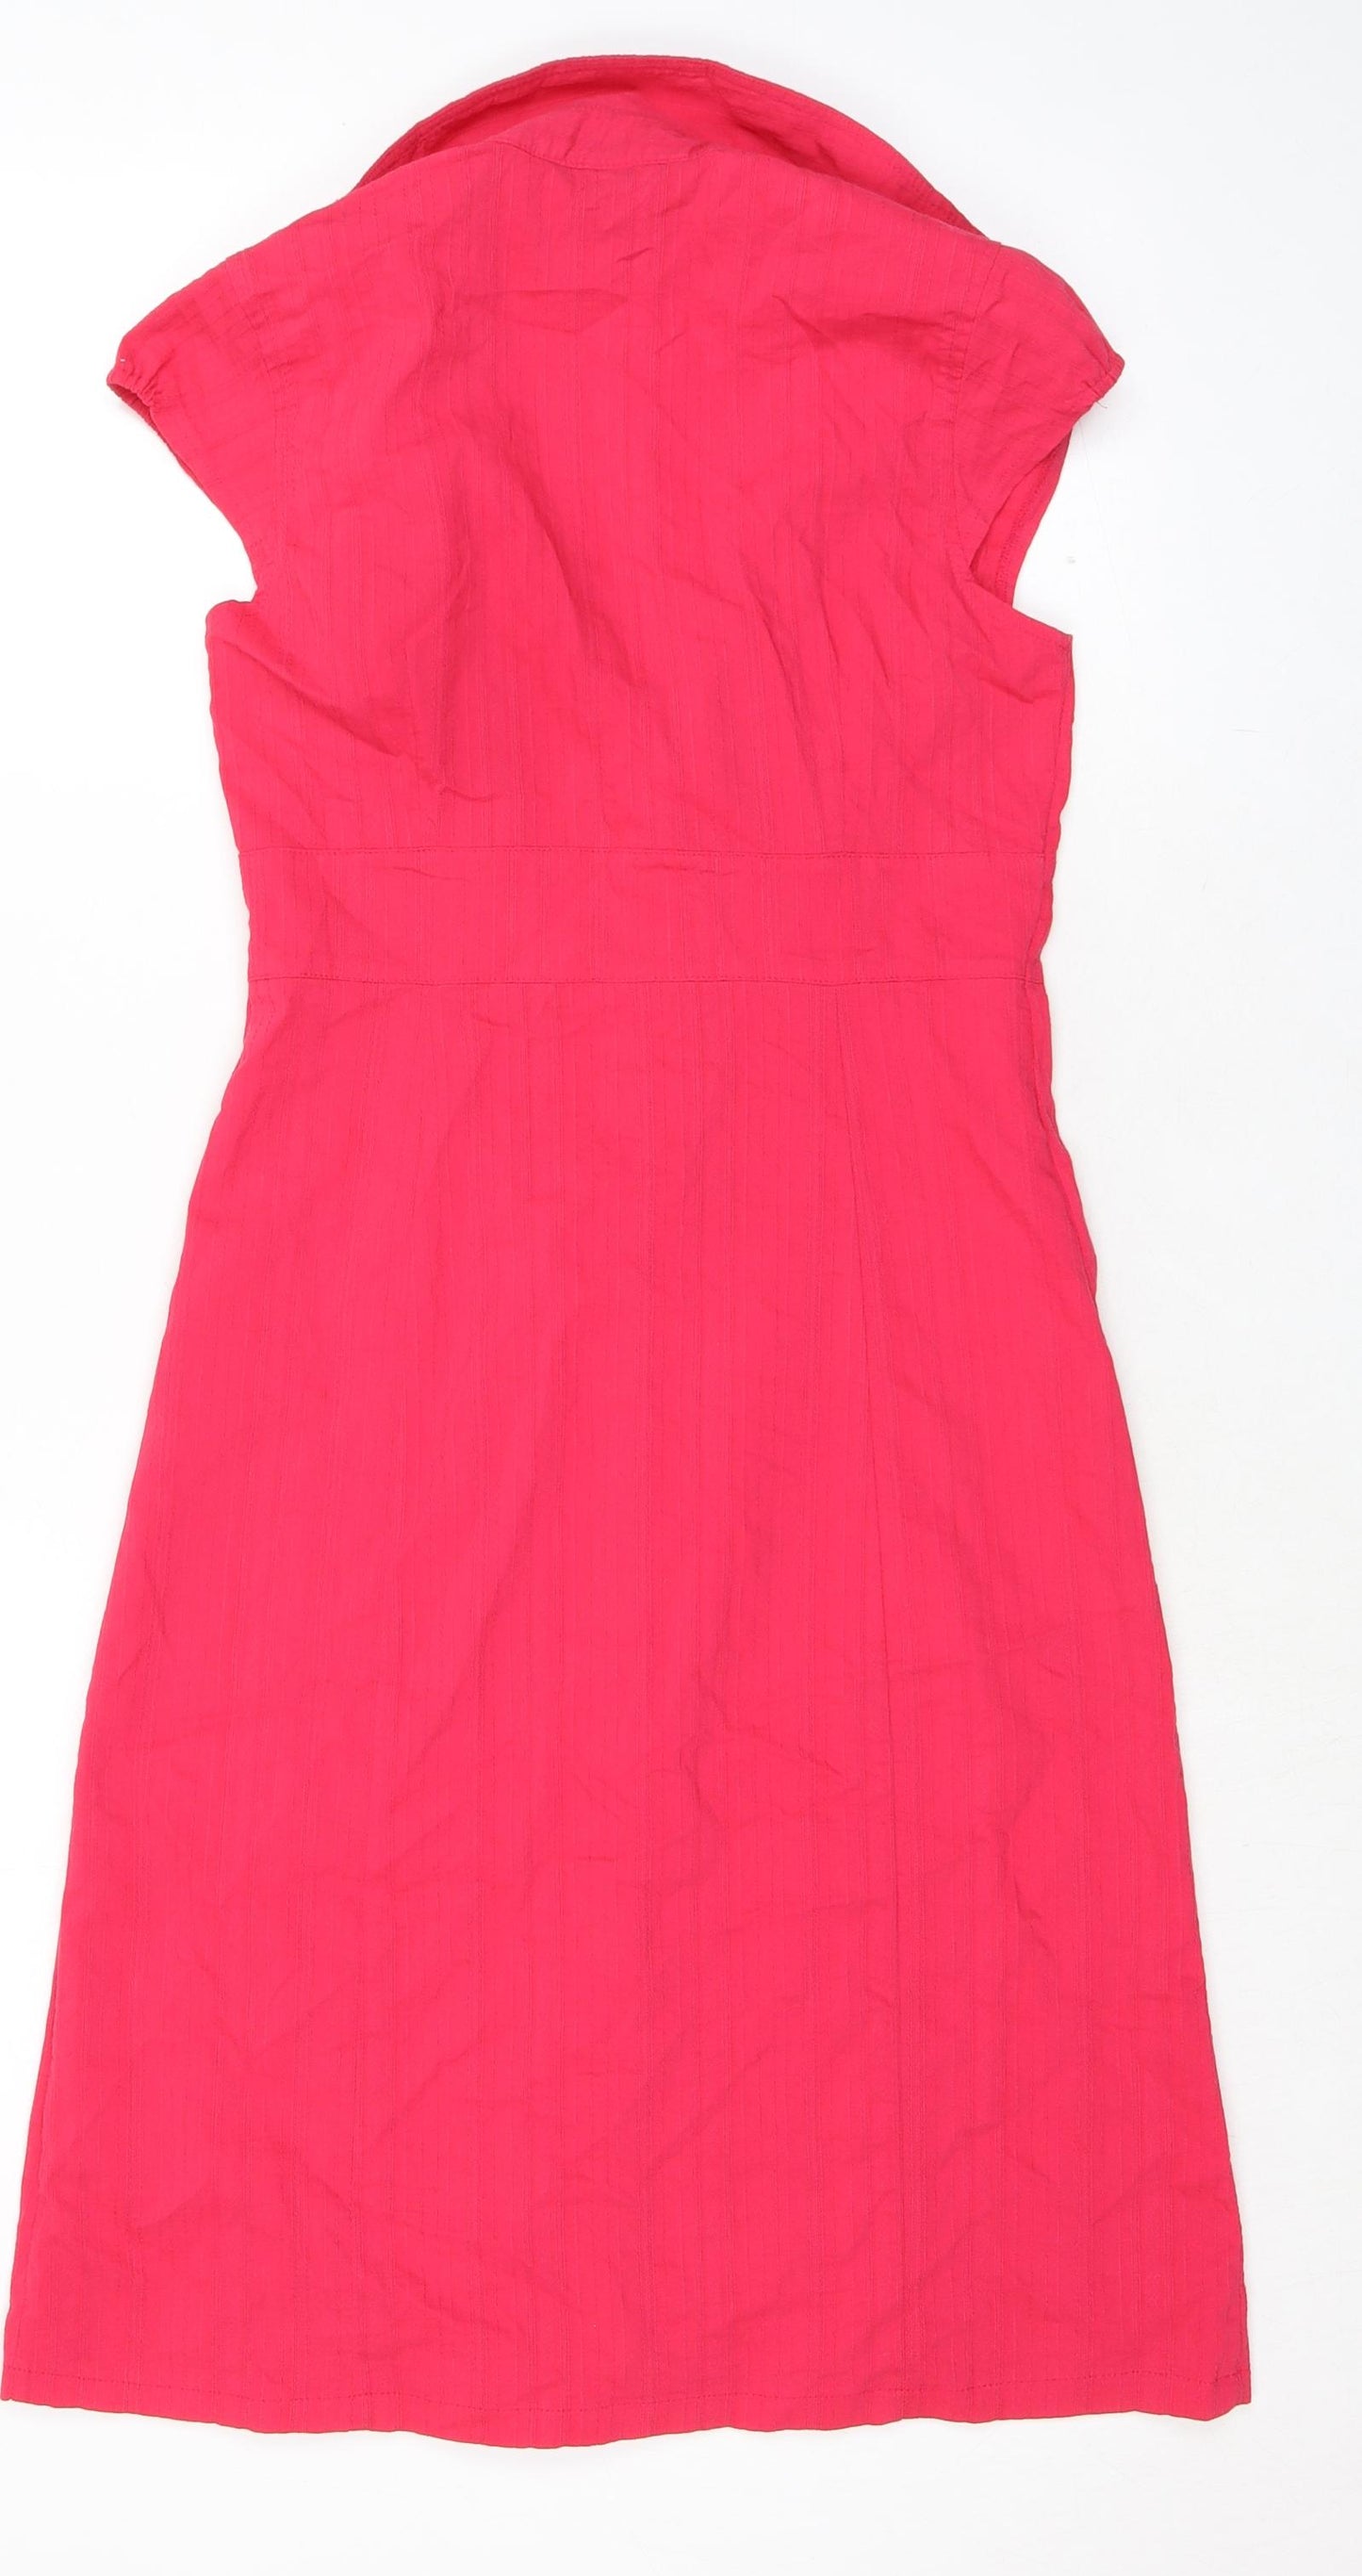 H&M Womens Pink Cotton Shirt Dress Size 8 Collared Button